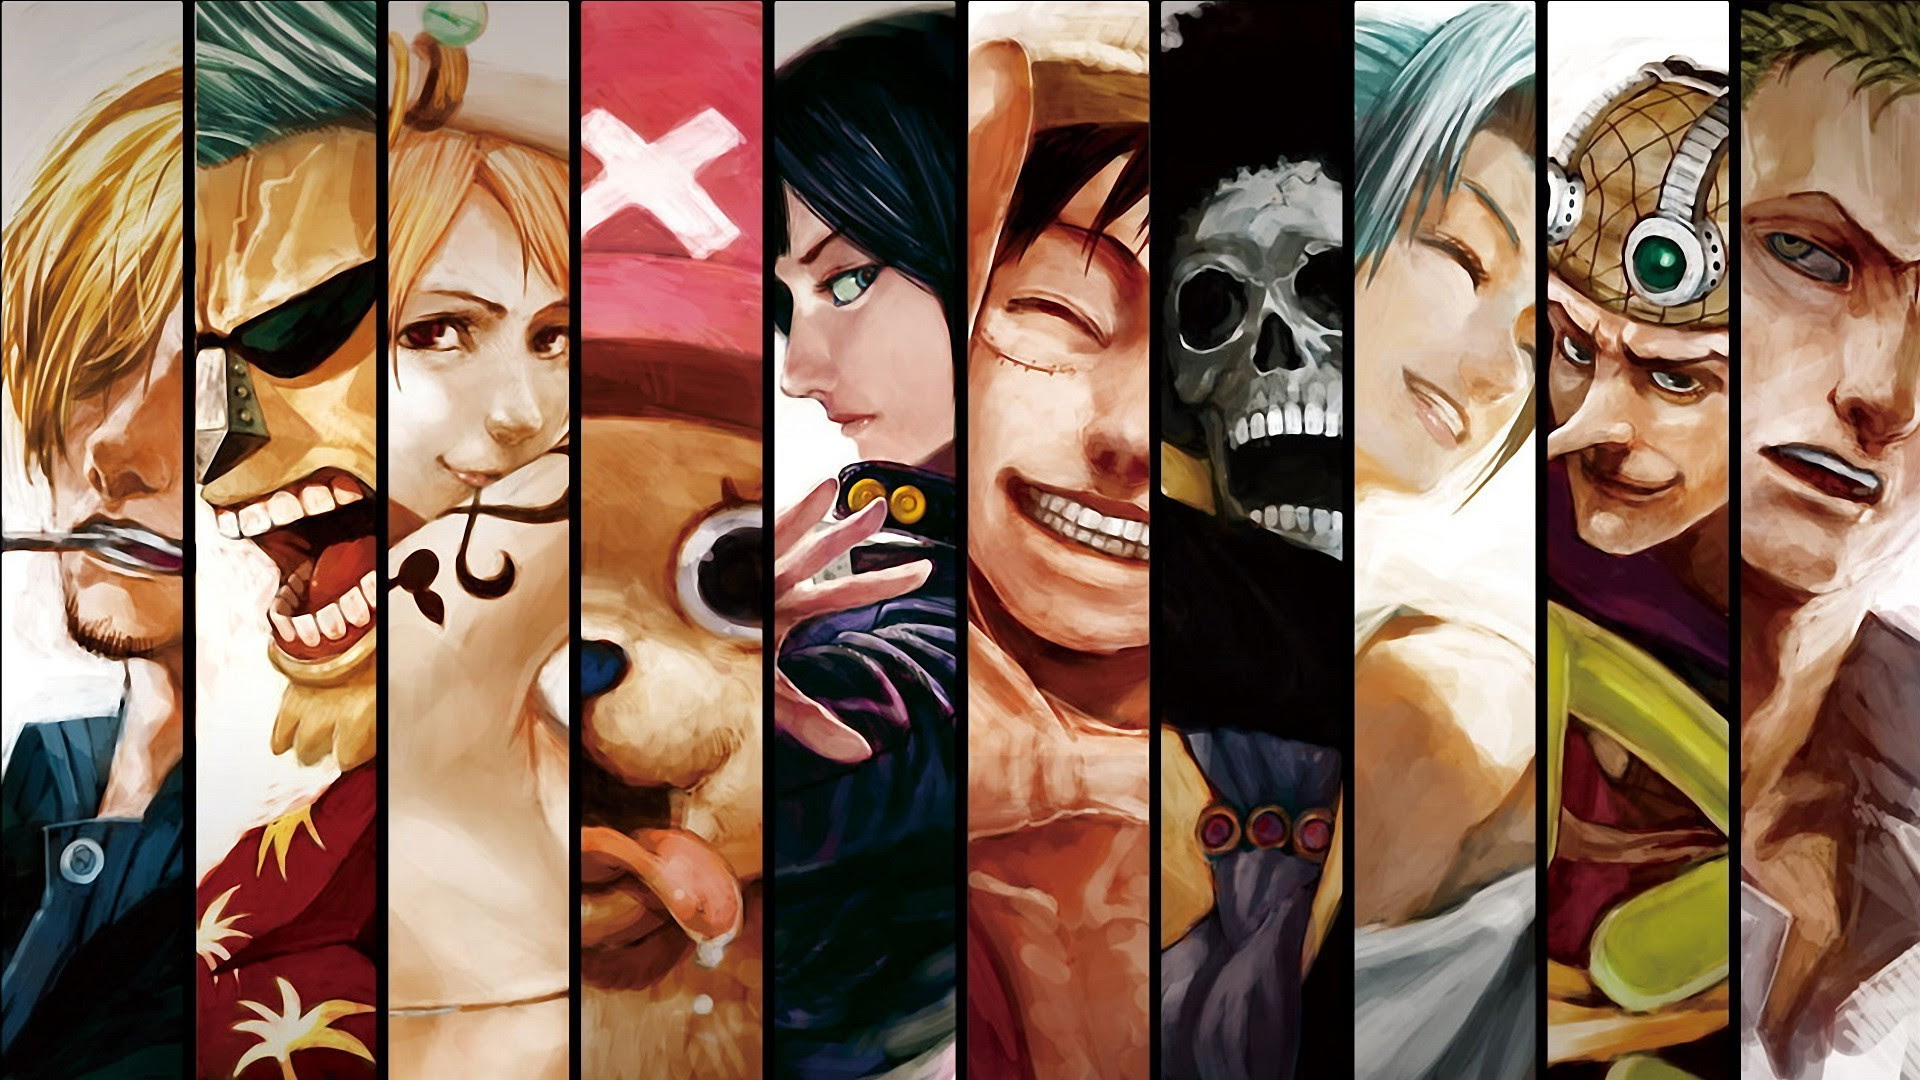 4K One Piece Wallpaper - WallpaperSafari